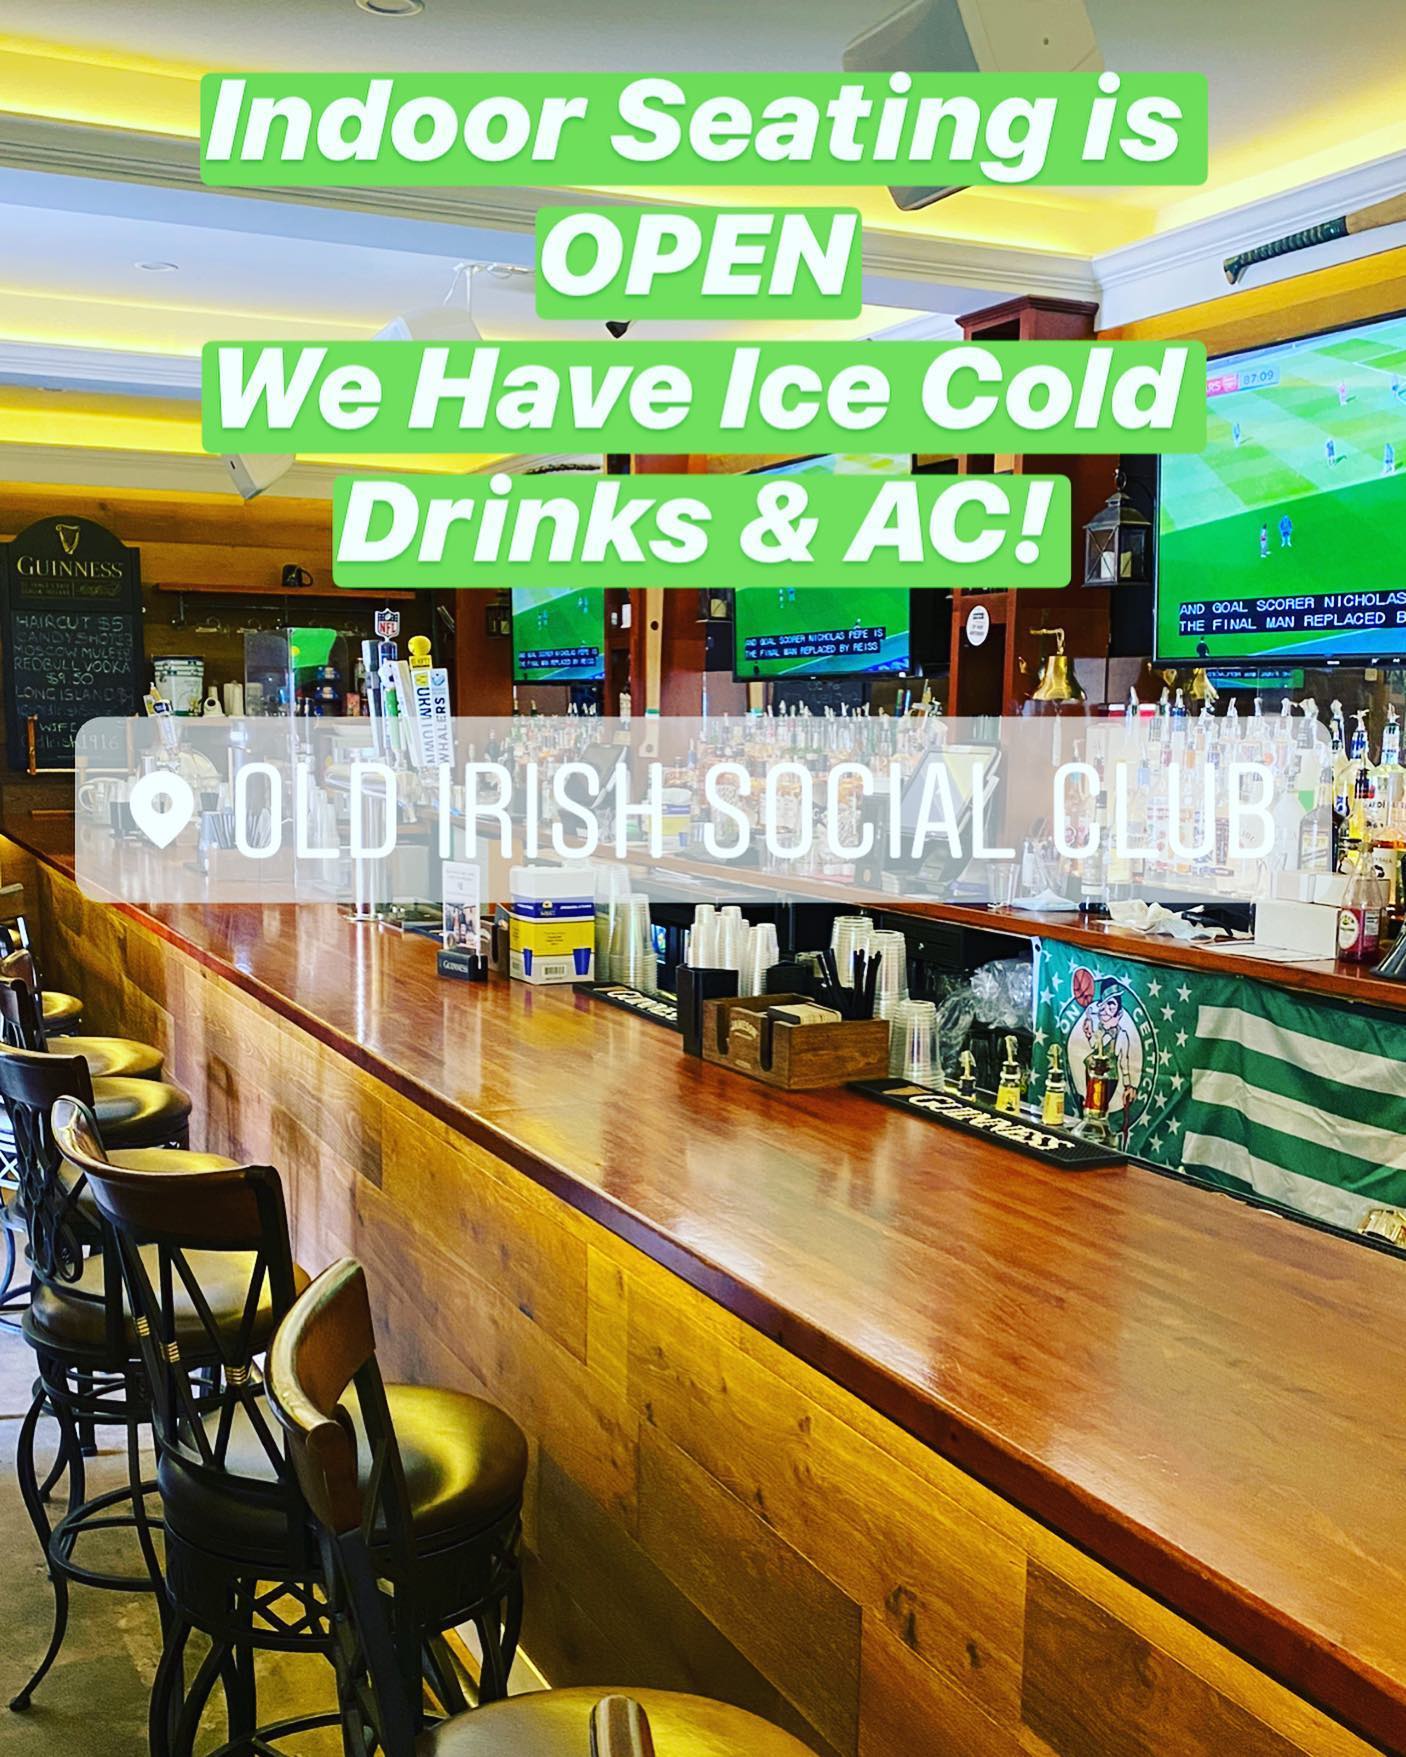 Old Irish Social Club